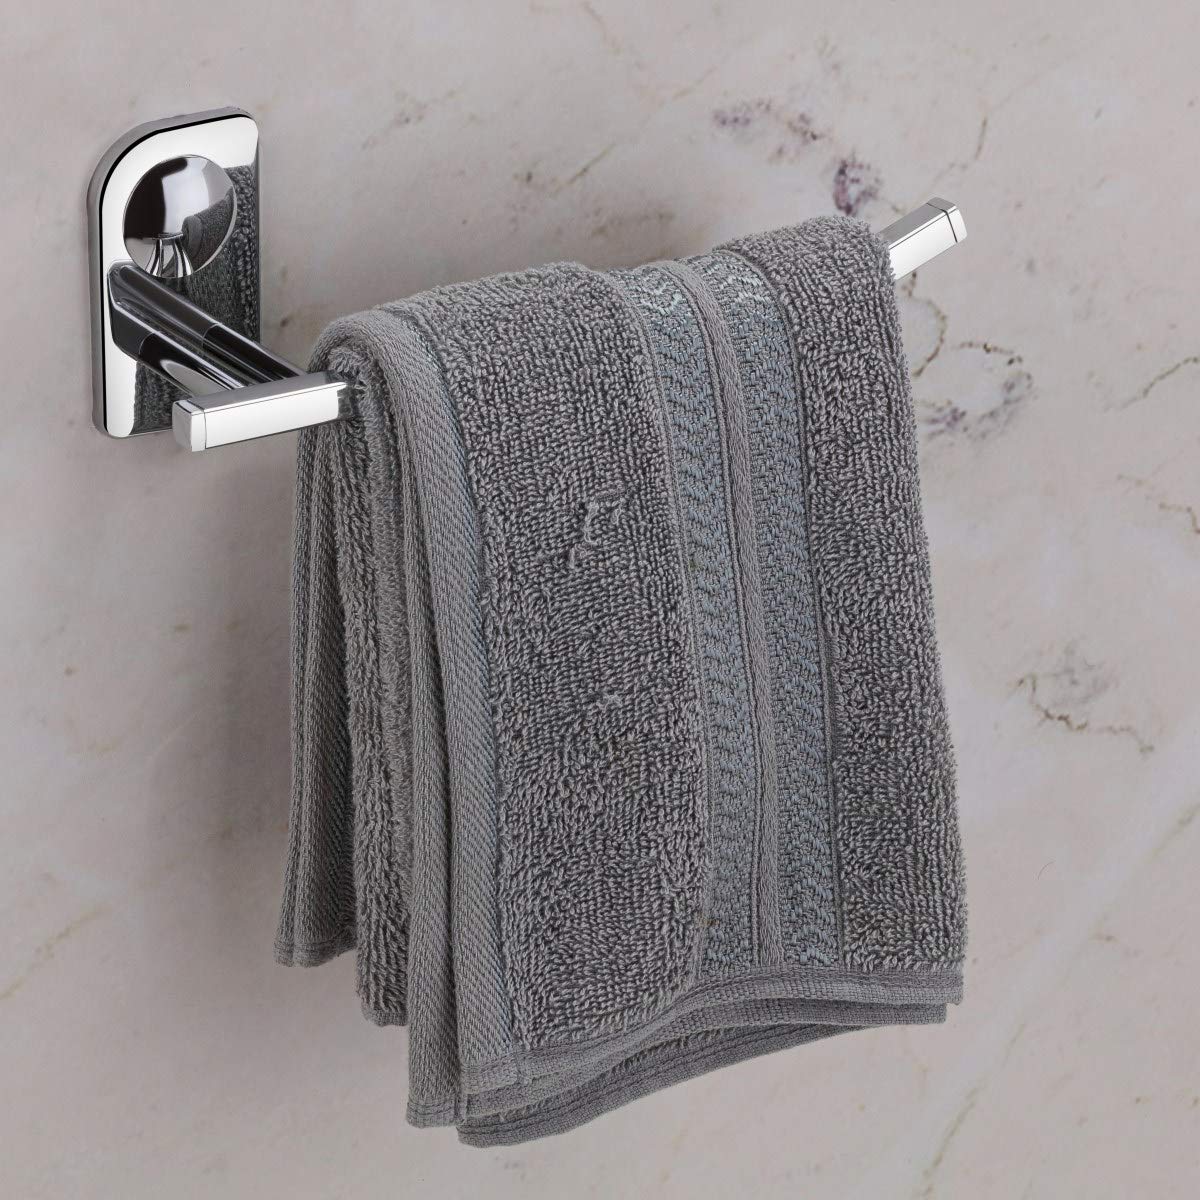 Plantex Dream Stainless Steel Napkin Ring/Towel Ring/Napkin Holder/Towel Hanger/Bathroom Accessories (Chrome) - Pack of 1